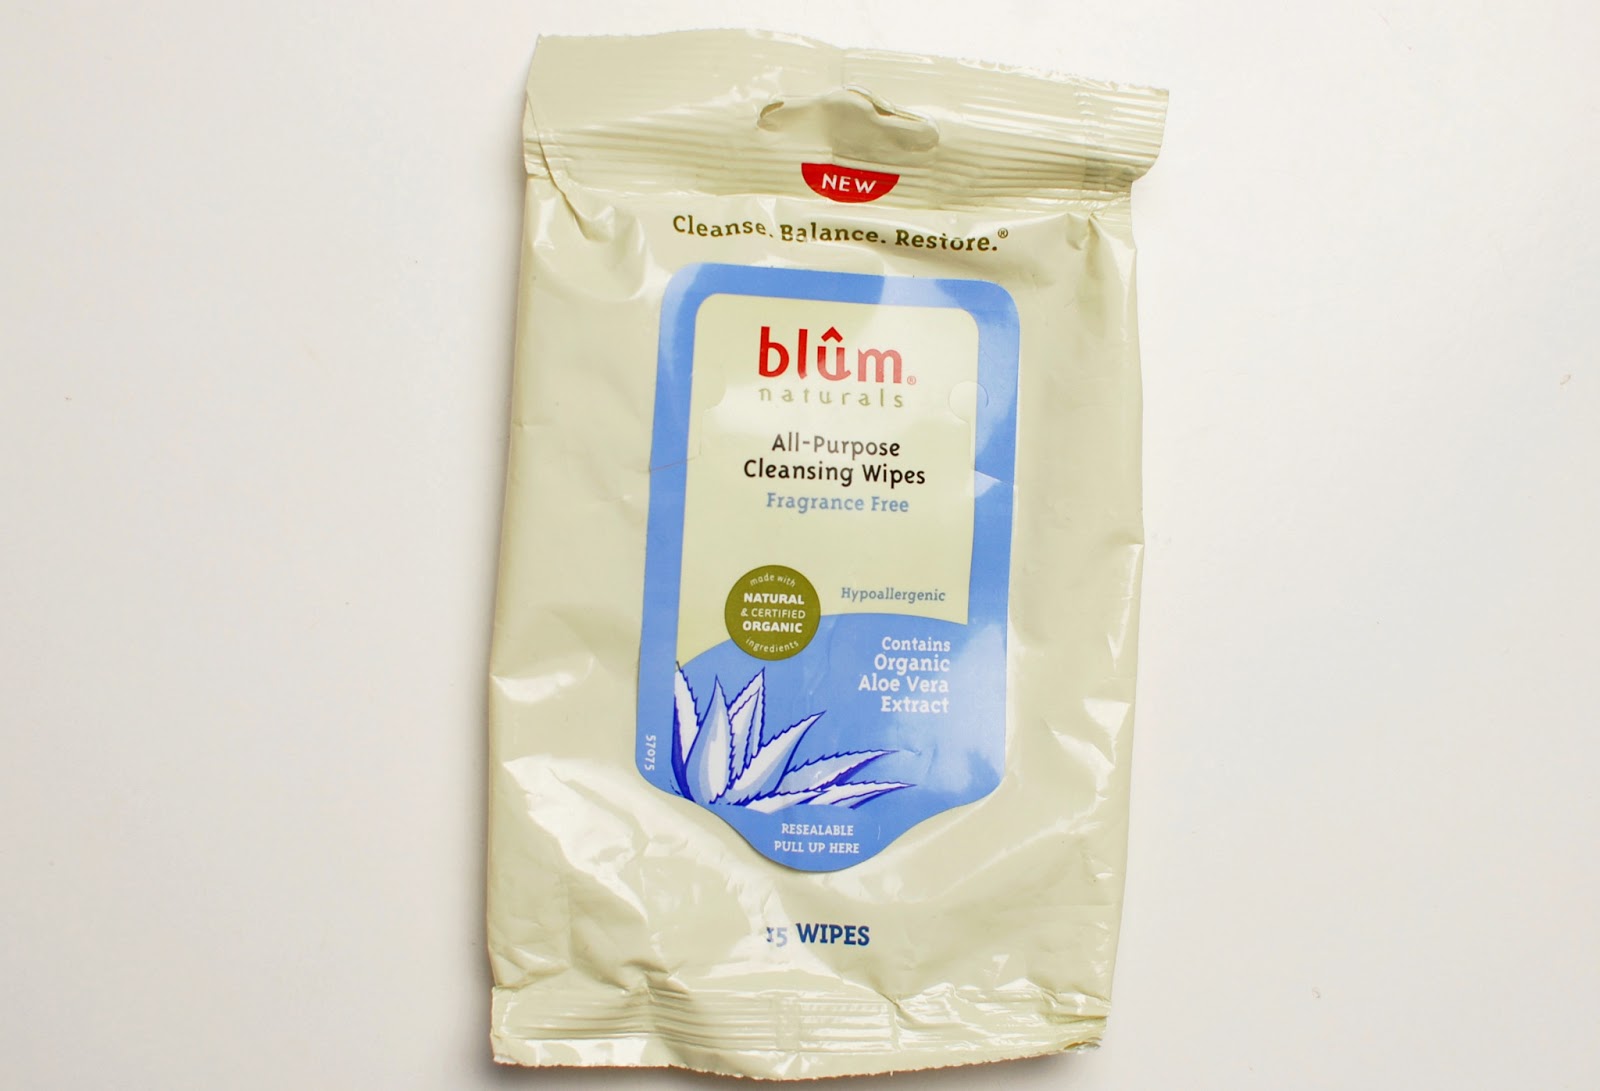 Blum Naturals All-Purpose Cleansing Wipes